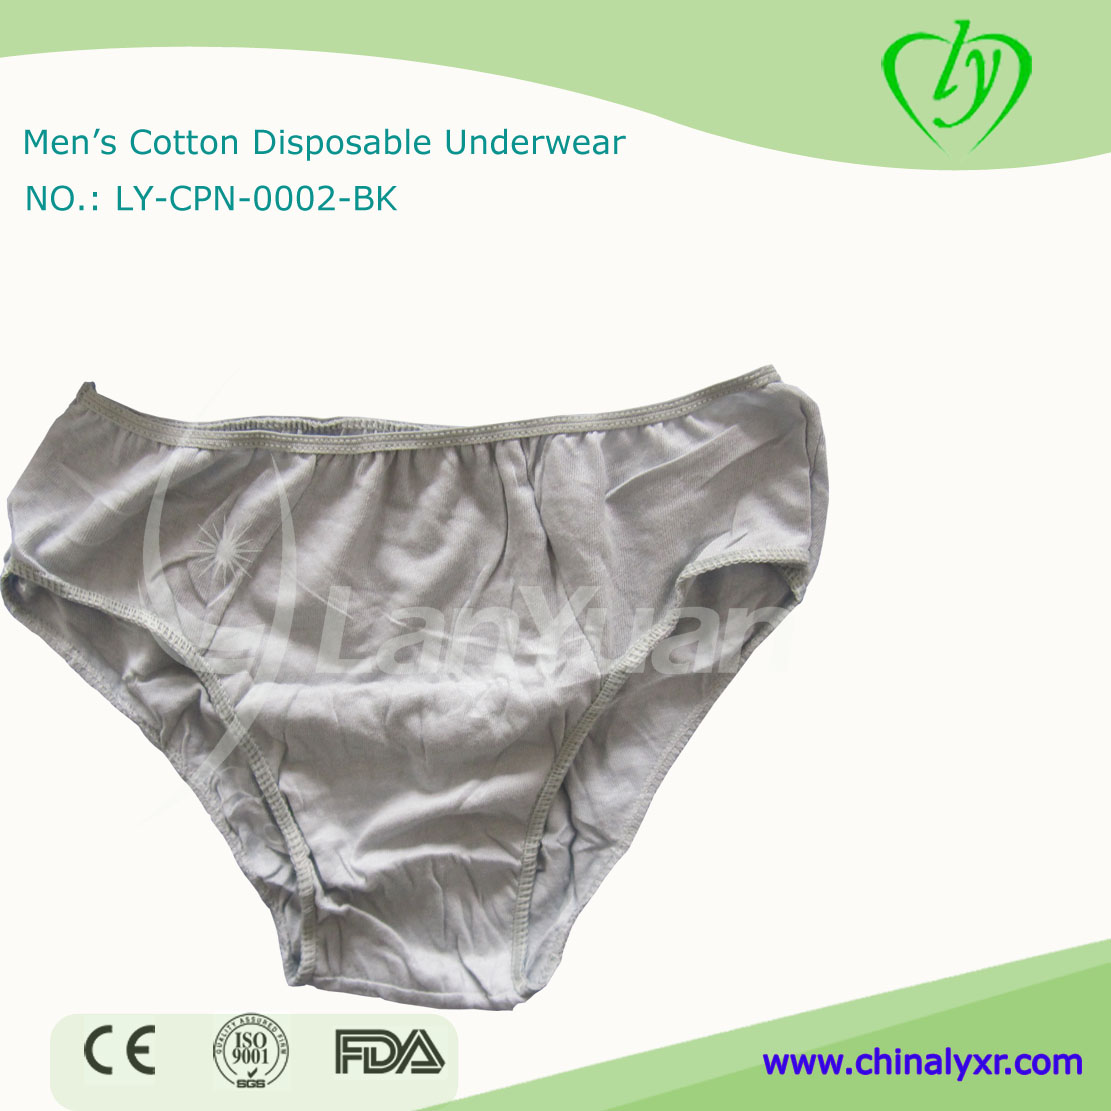 90g Disposable Cotton Underwear for Men